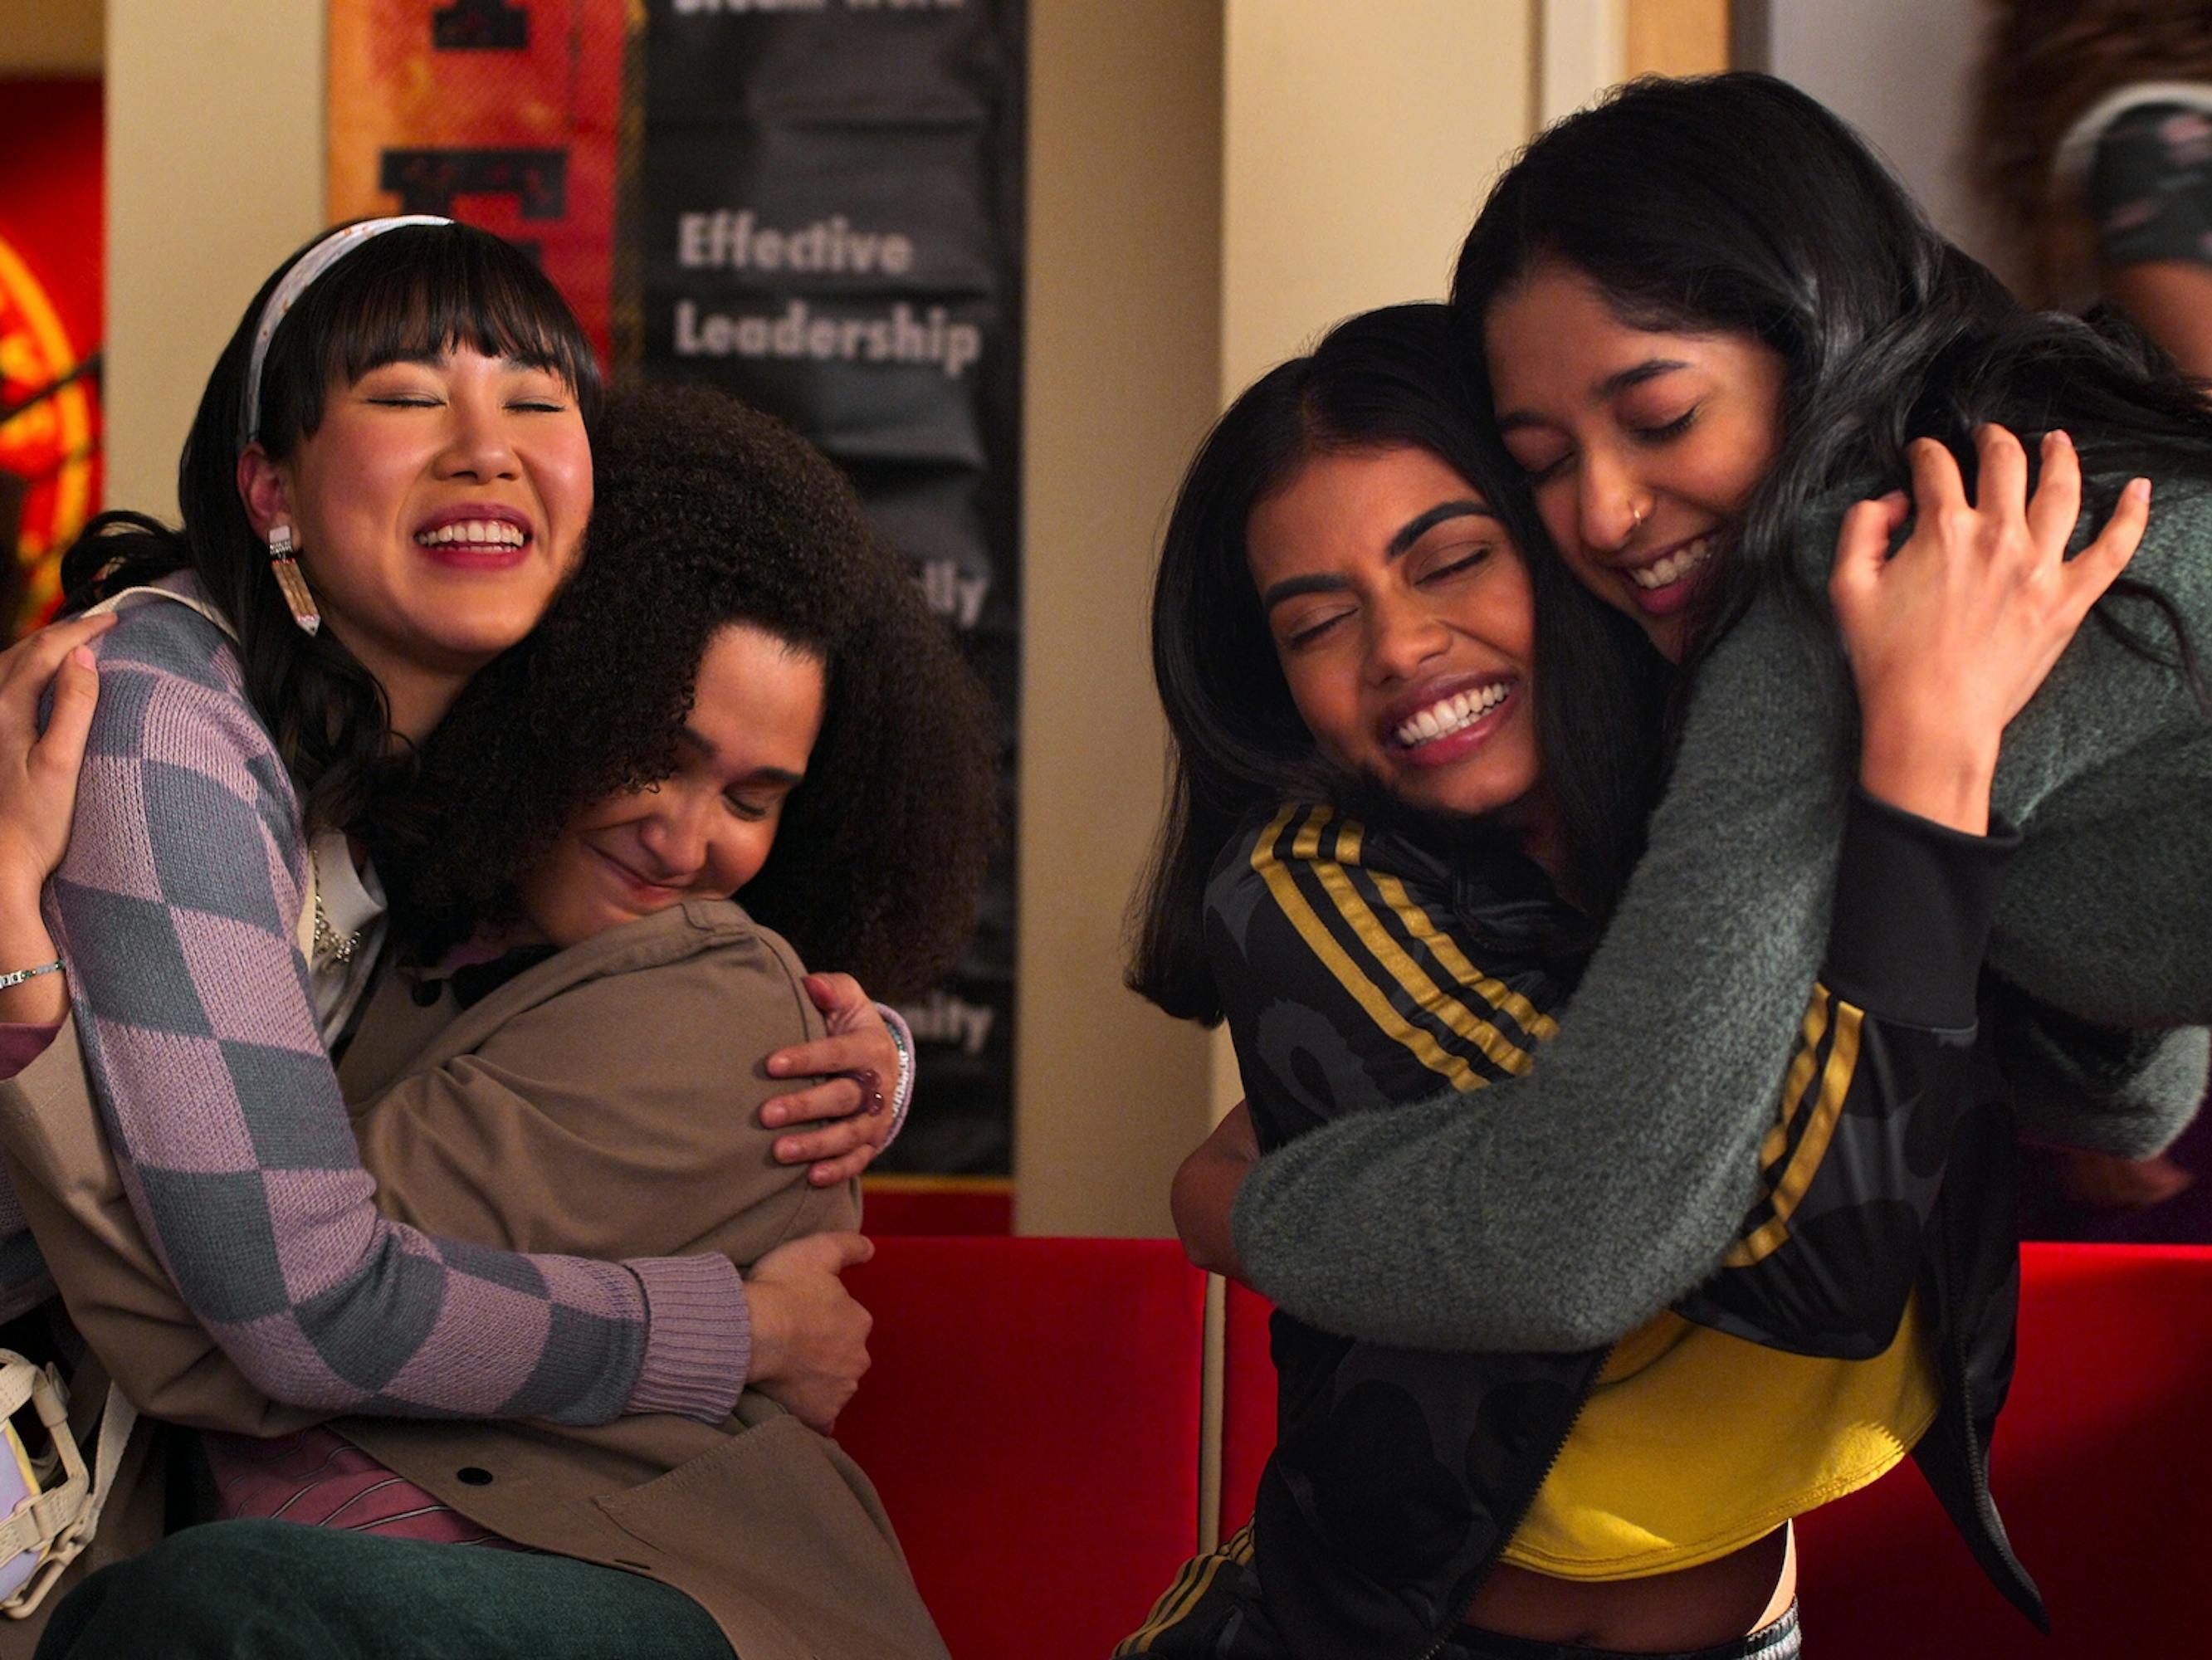 Eleanor Wong (Ramona Young), Fabiola Torres (Lee Rodriguez), Aneesa (Megan Suri), and Devi Vishwakumar (Maitreyi Ramakrishnan) hug. They're sitting on Sherman Oaks red- chairs.